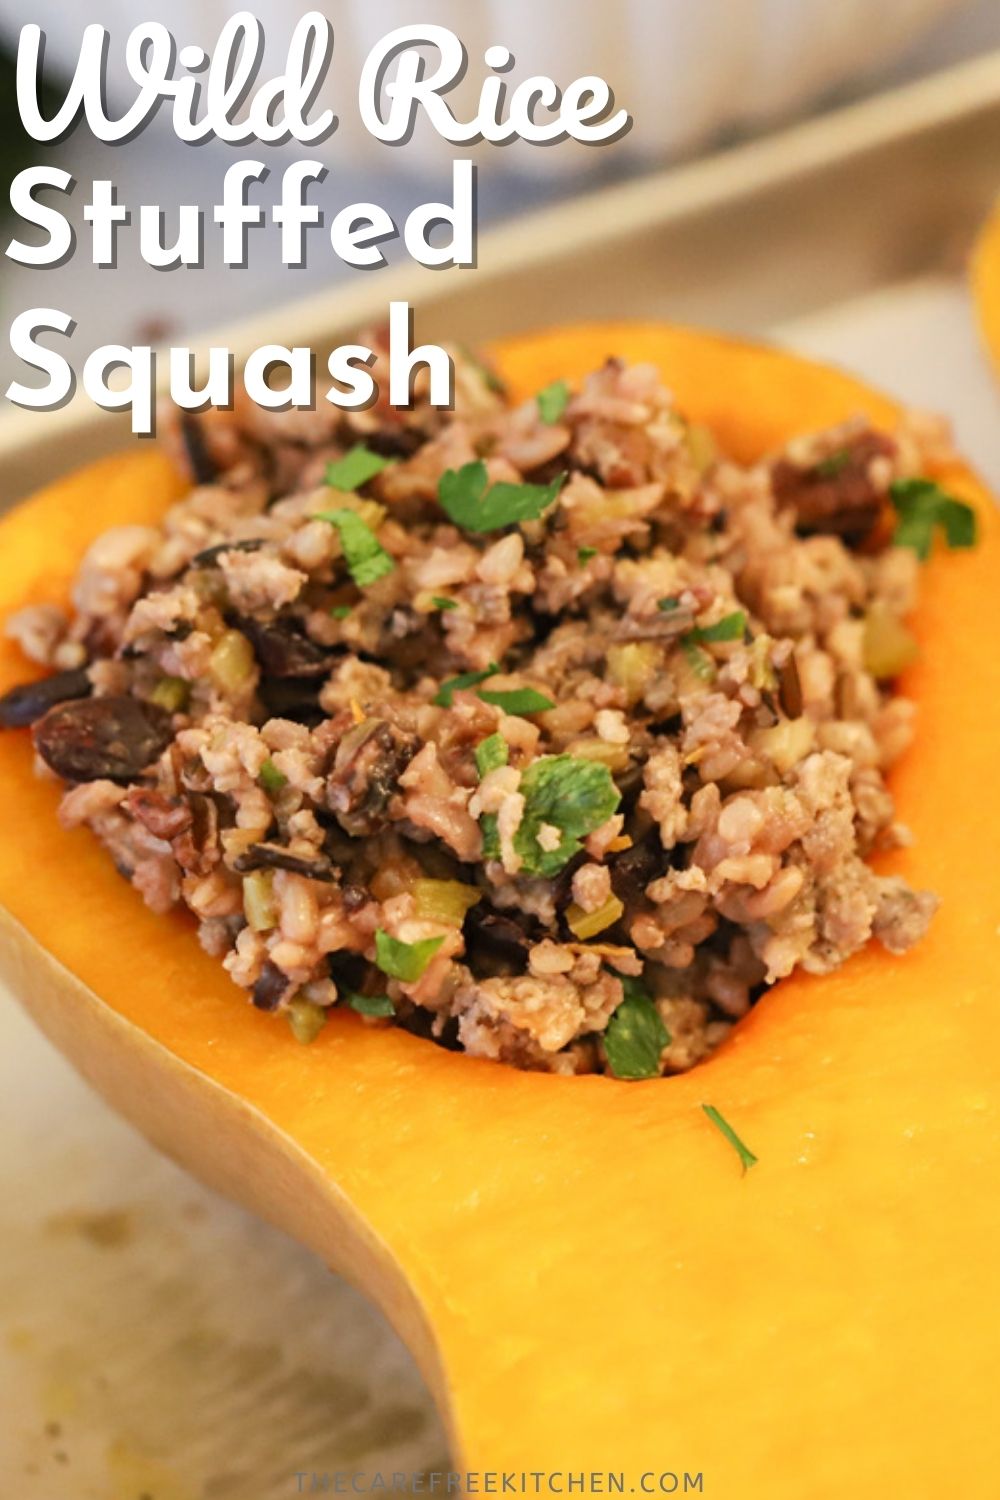 Wild Rice Stuffed Squash - The Carefree Kitchen